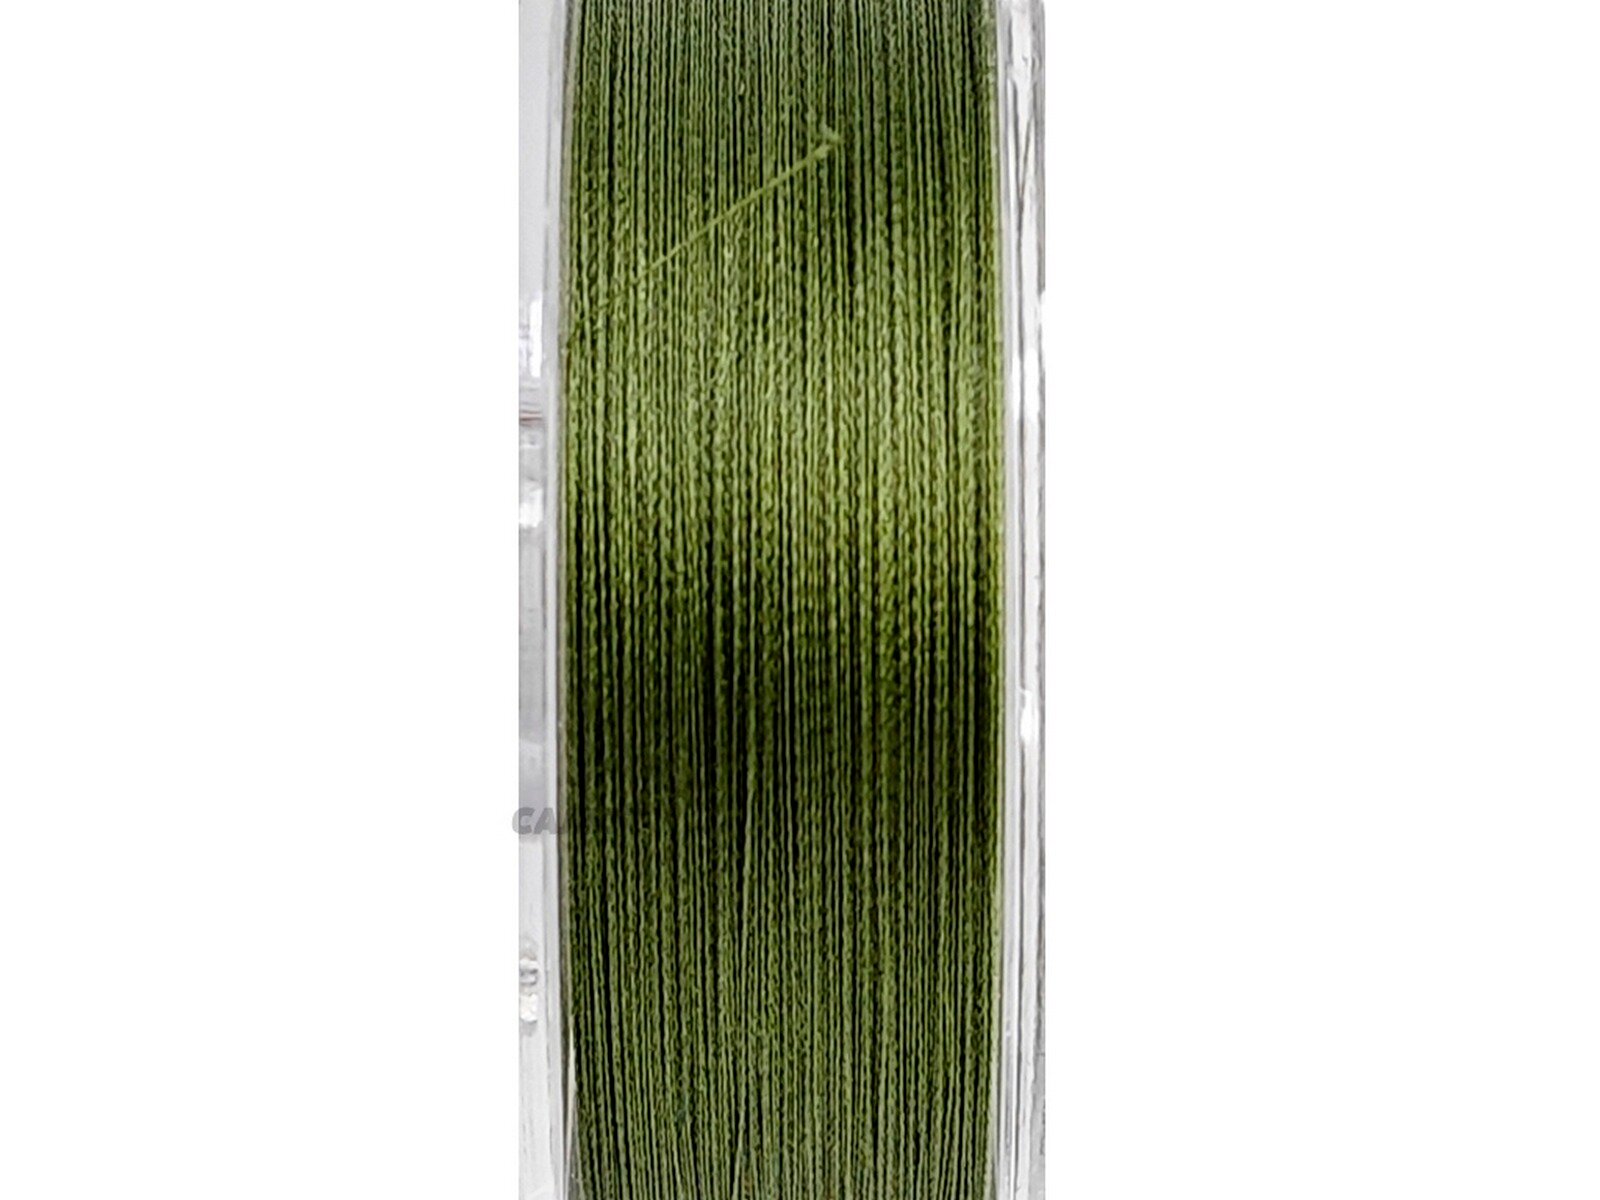 Плетеный шнур для рыбалки №ONE Superior 4х-жильный 100м (темно-зеленый) диаметр 005мм